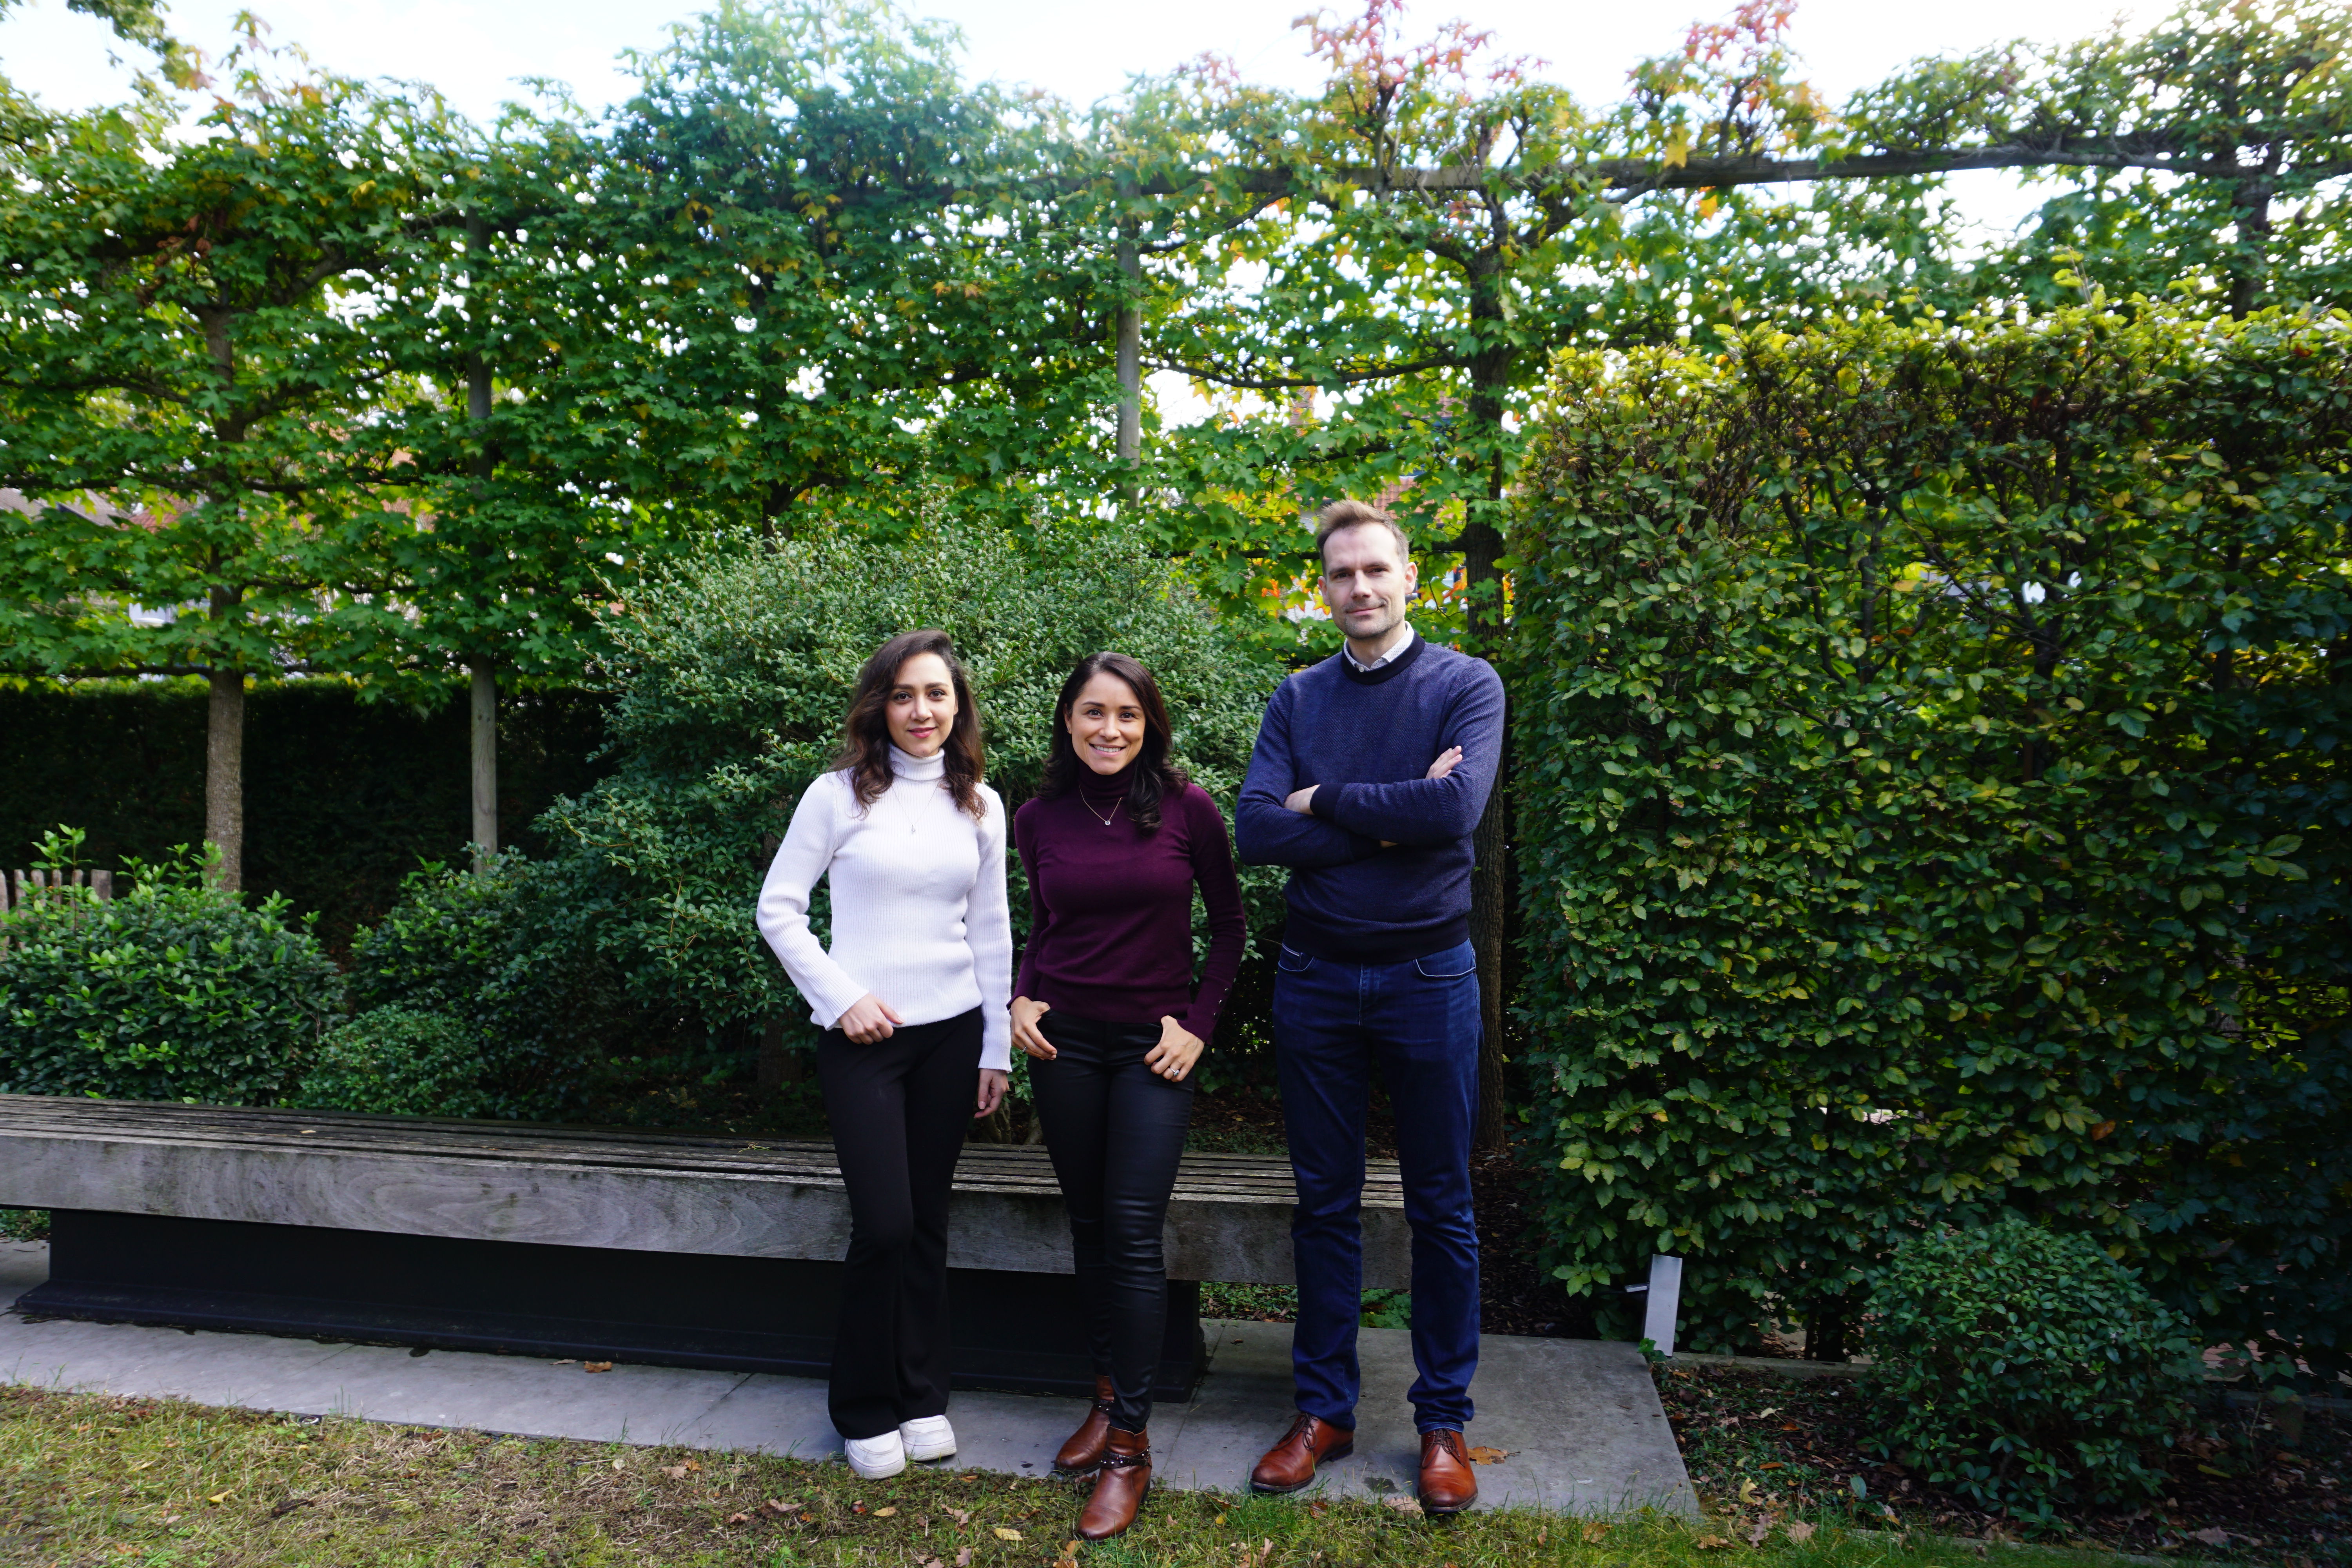 Specifix チーム (左から右へ): Soha Mahdi 博士 (CTO)、Alejandra Ortega 博士 (CEO)、Matthias Vanhees 教授 (CMO)